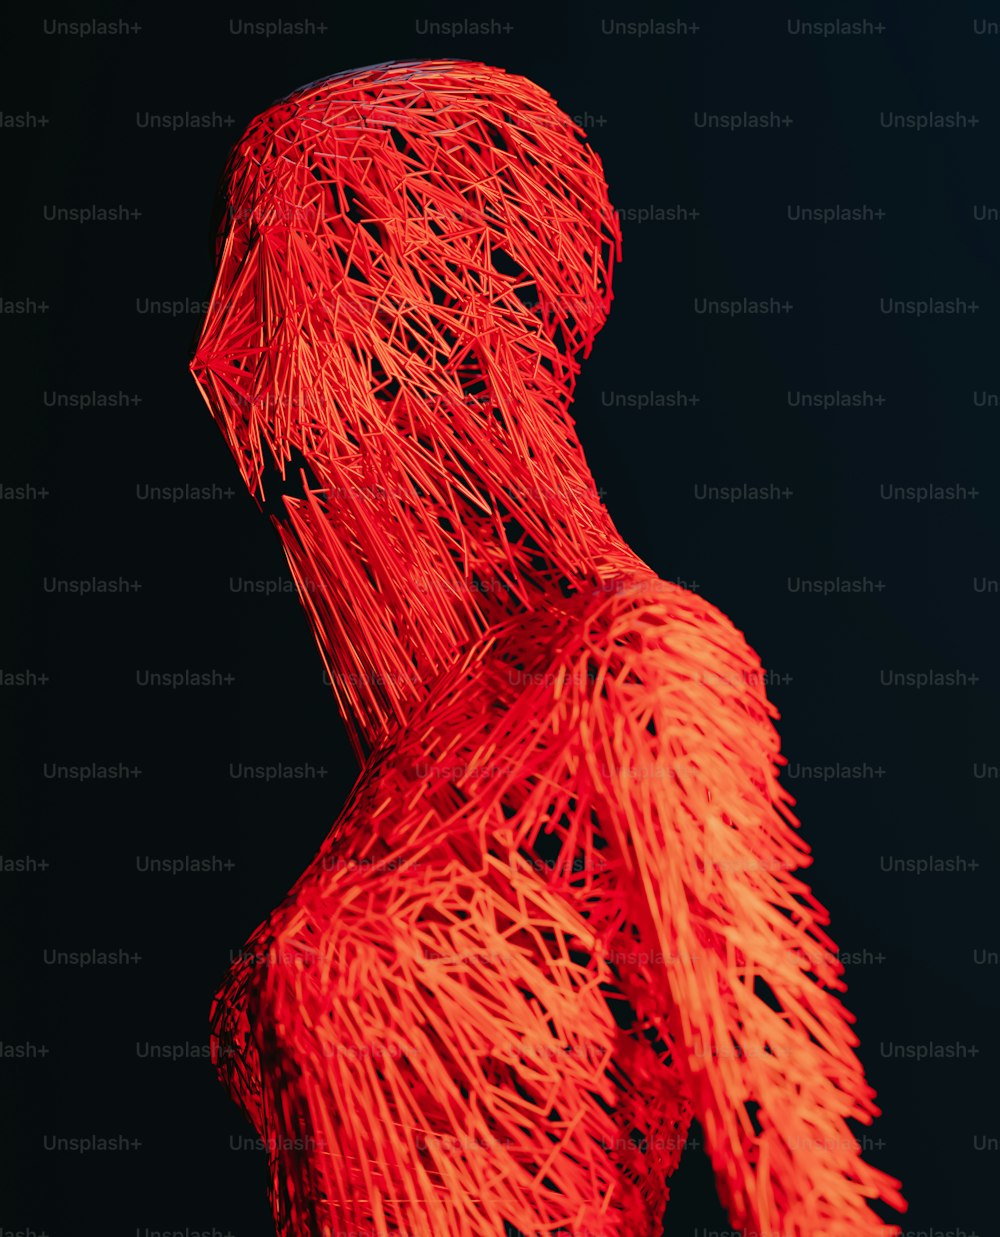 Una escultura roja de una persona con cabello largo